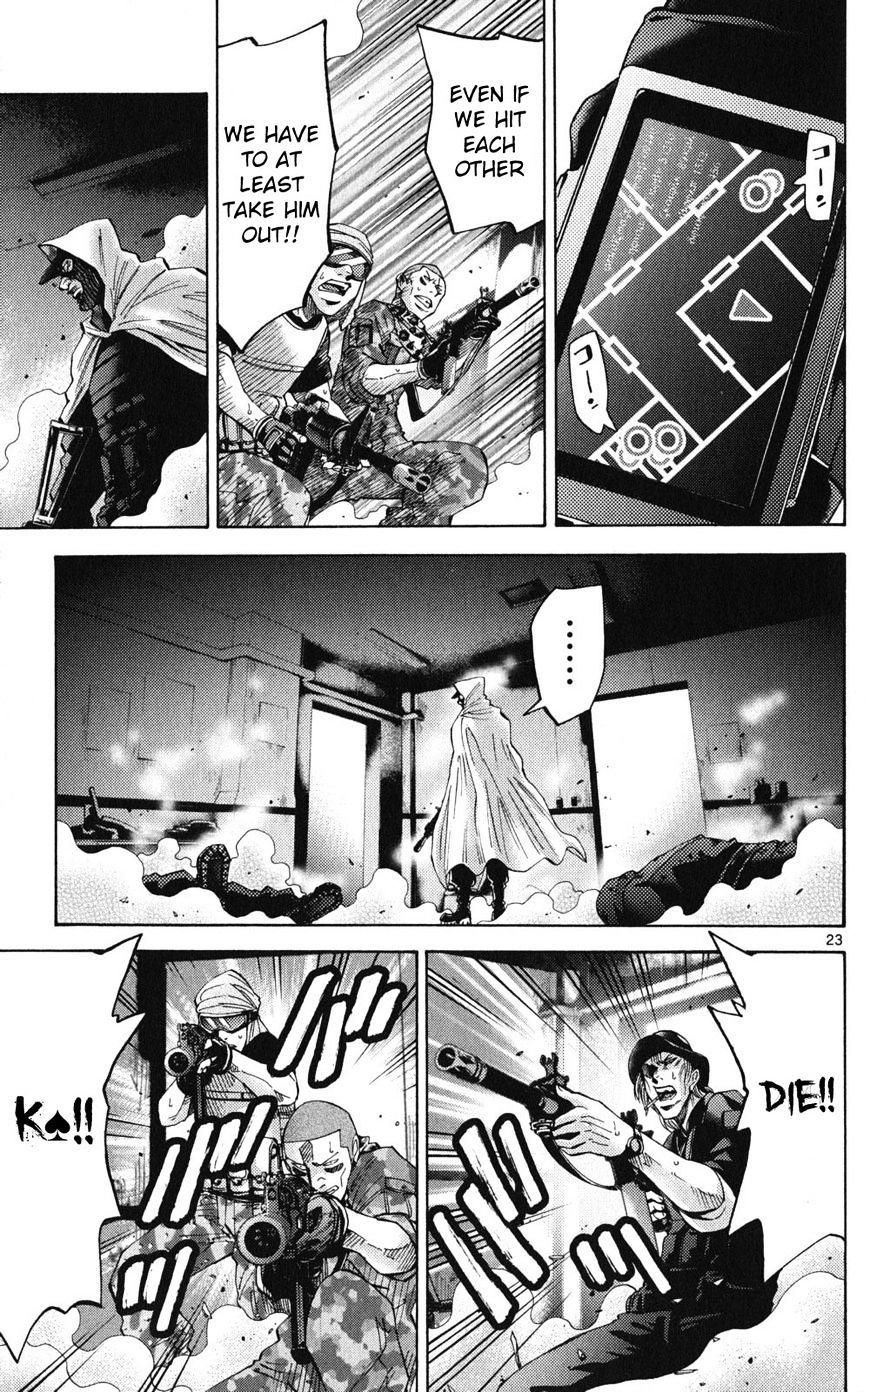 Imawa No Kuni No Alice Chapter 49.1 : Side Story 5 - King Of Spades (1) page 21 - Mangakakalot